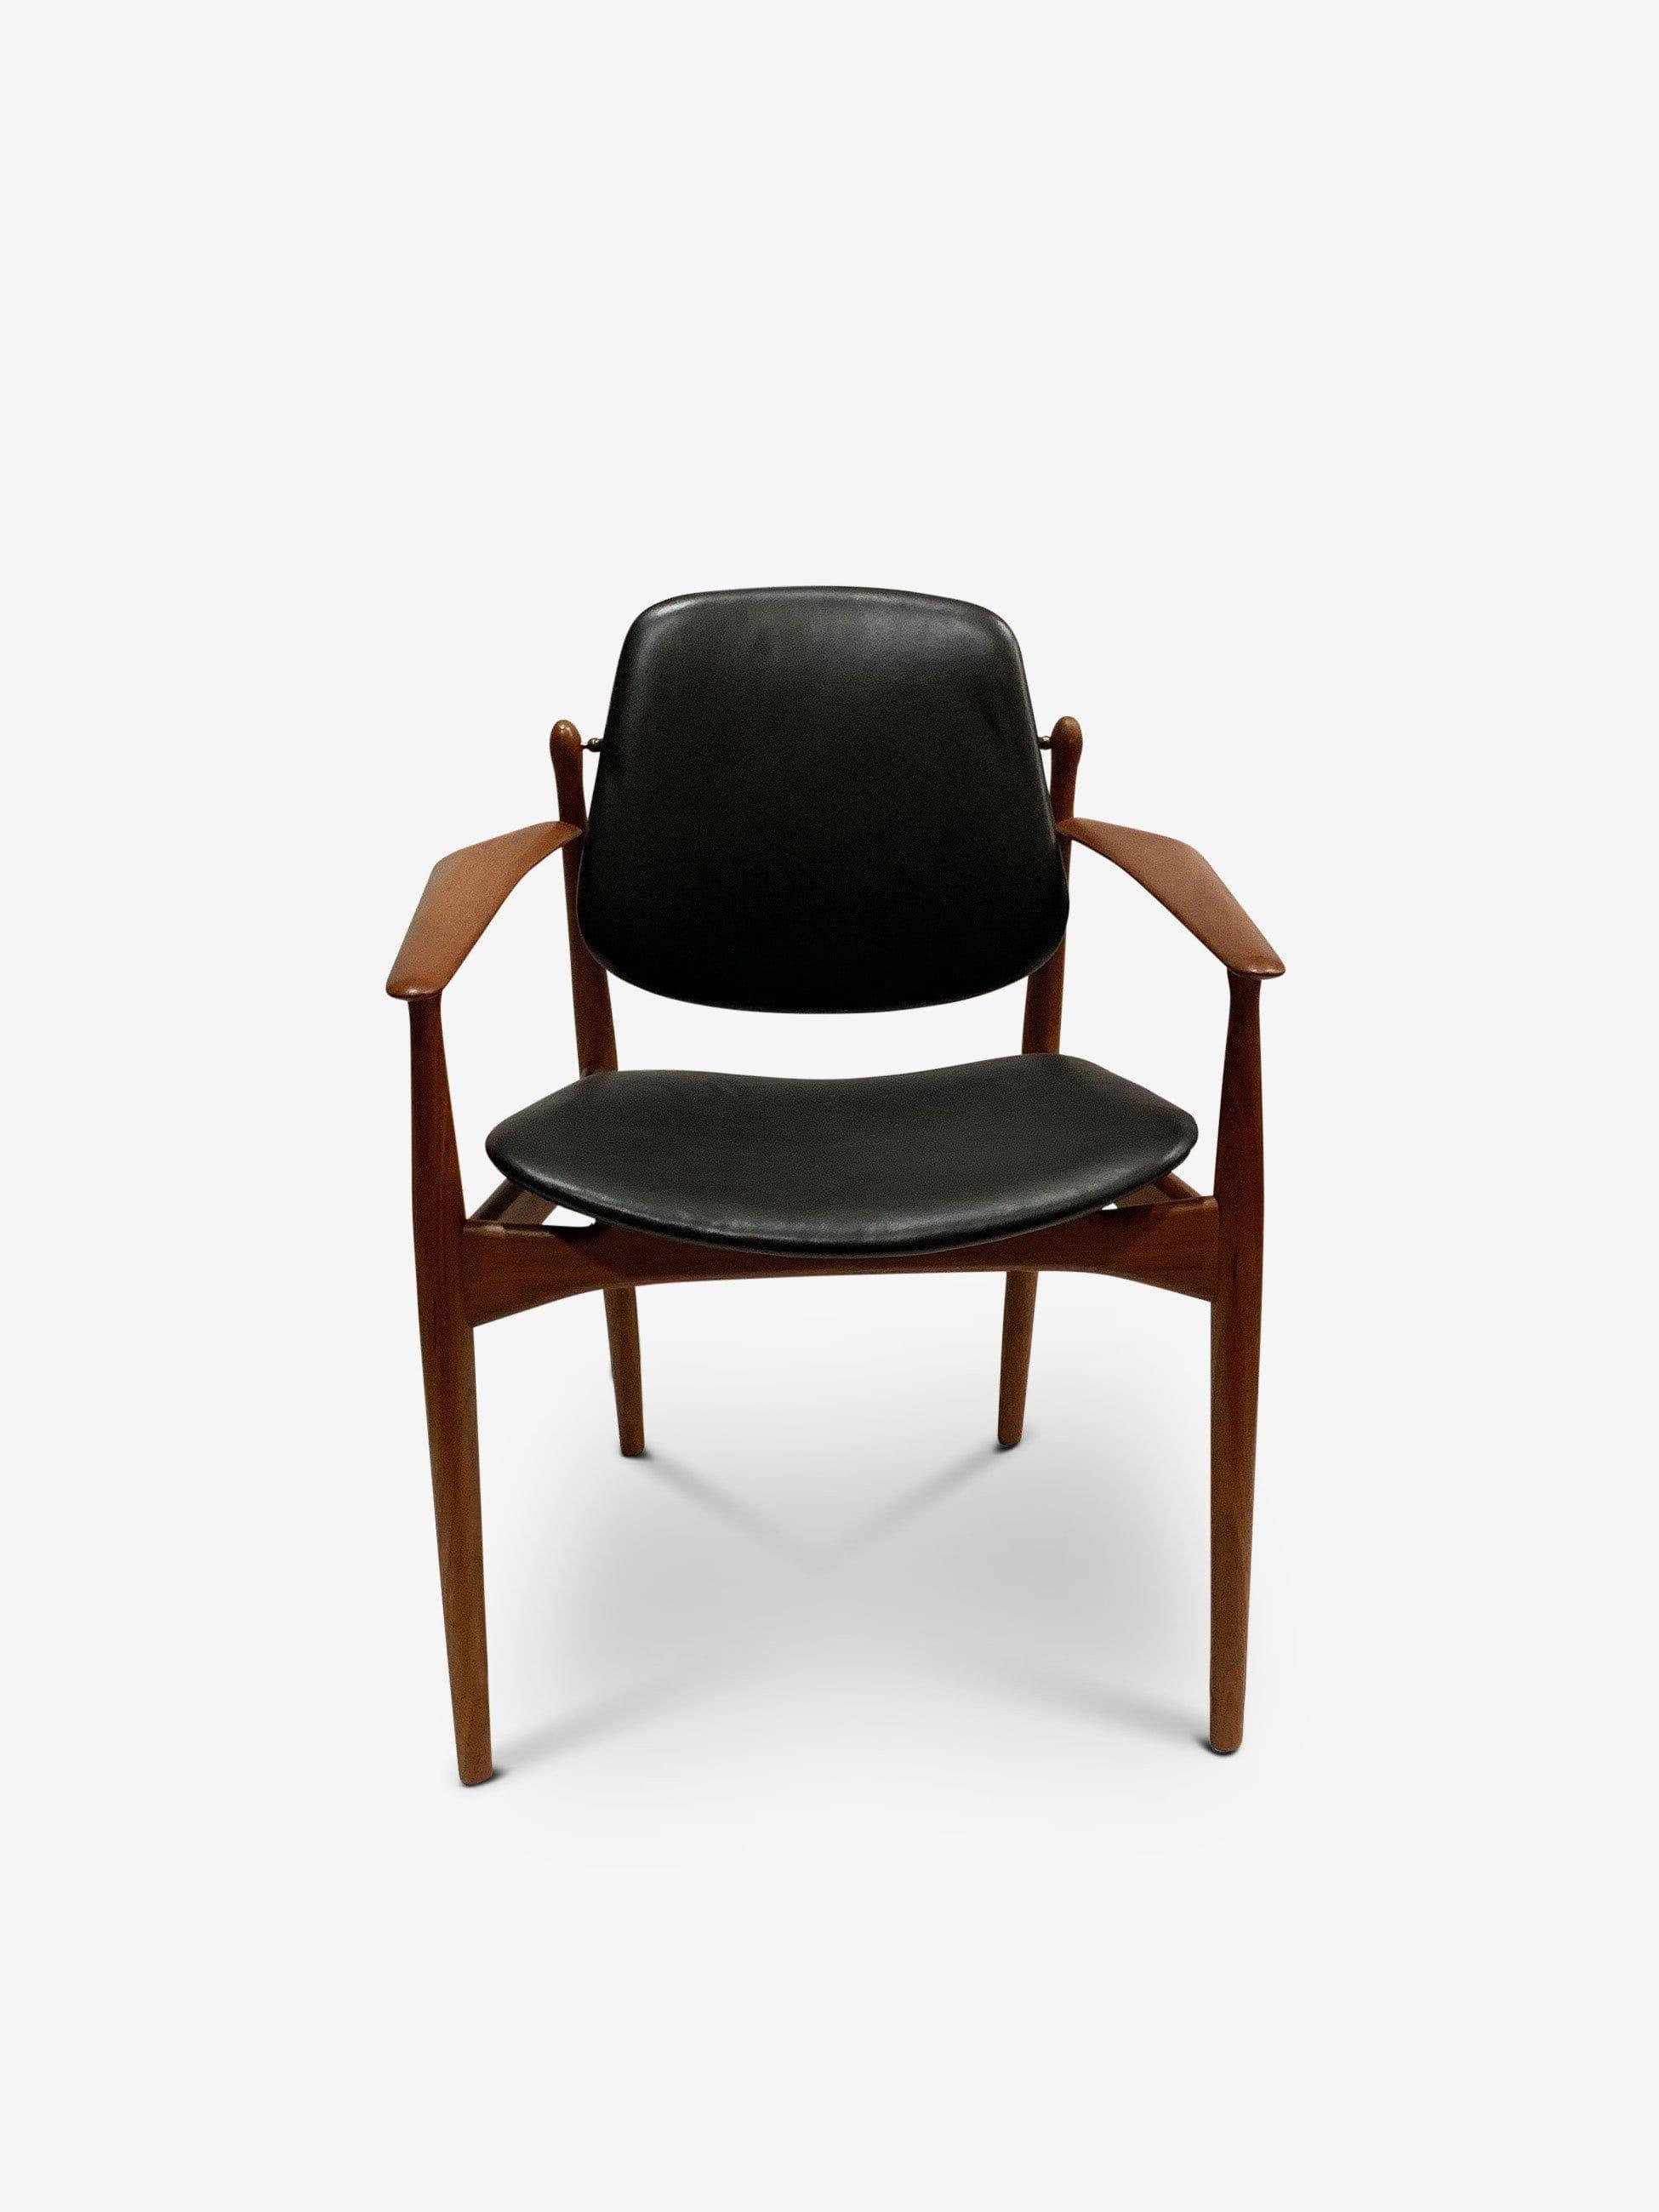 Dining Chairs Model 203 By Arne Vodder for France & Son Denmark